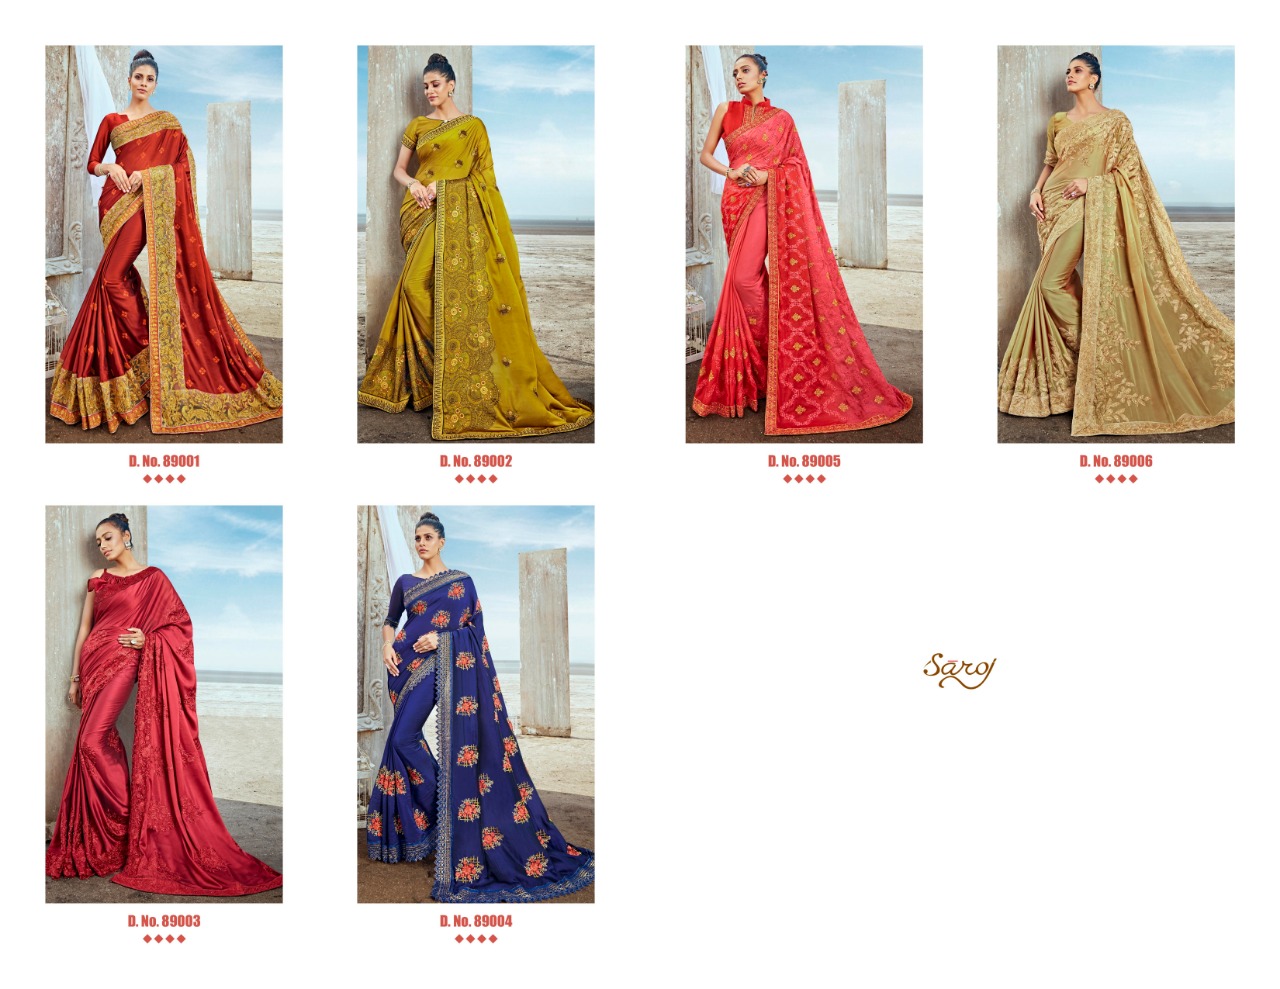 Saroj Saree Fashion Yug 89001-89006